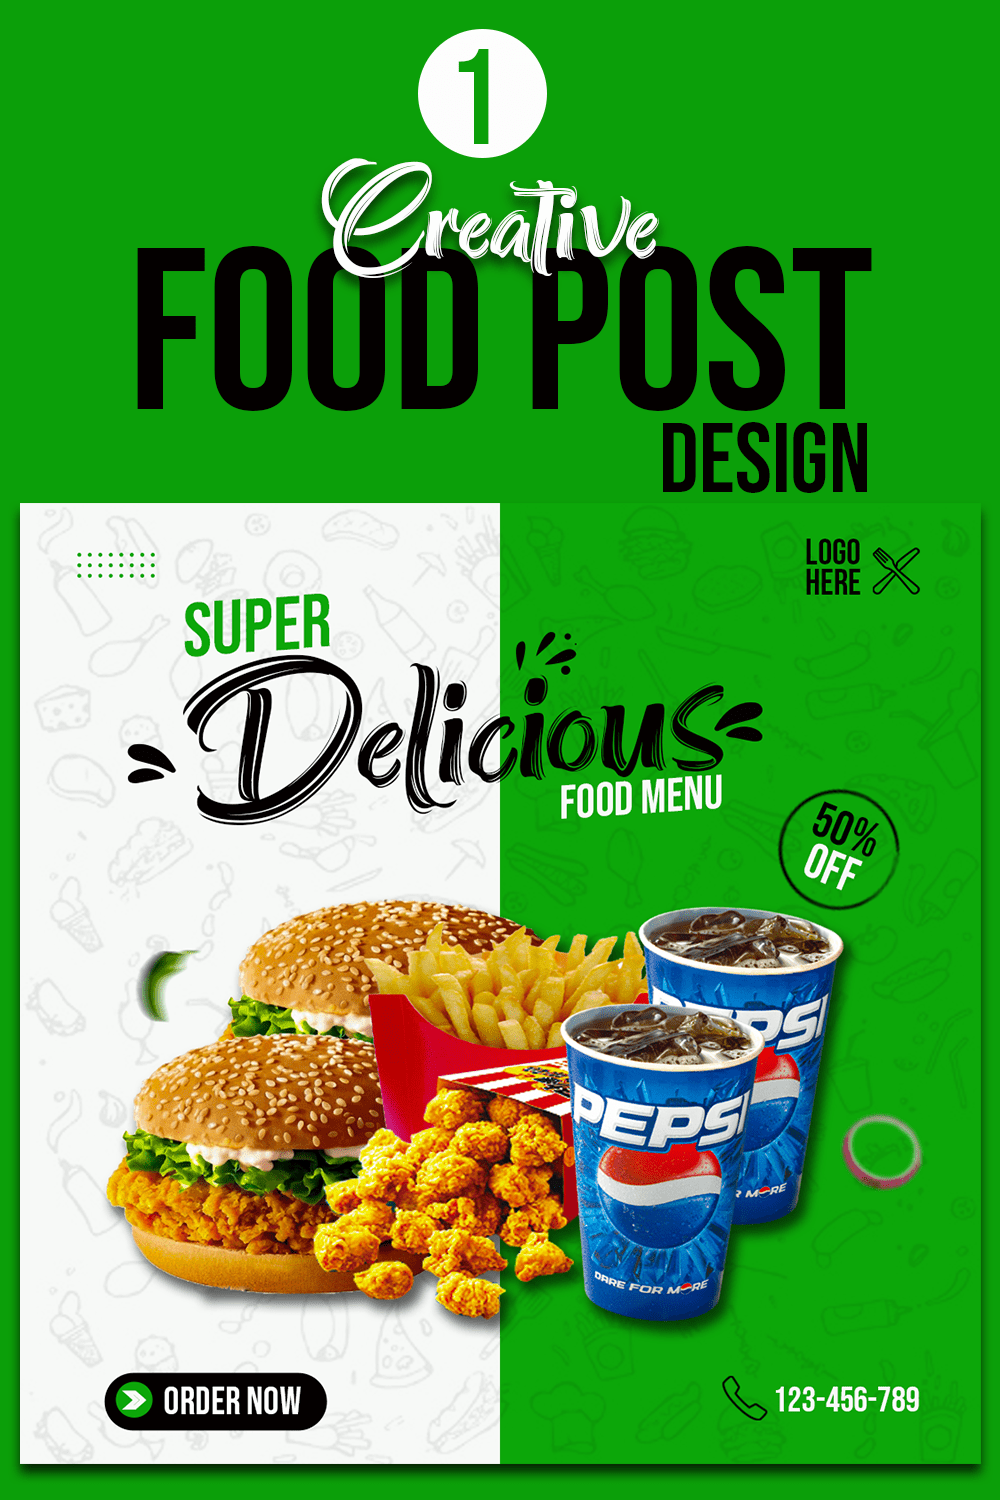 Social Media Food Post Design pinterest preview image.